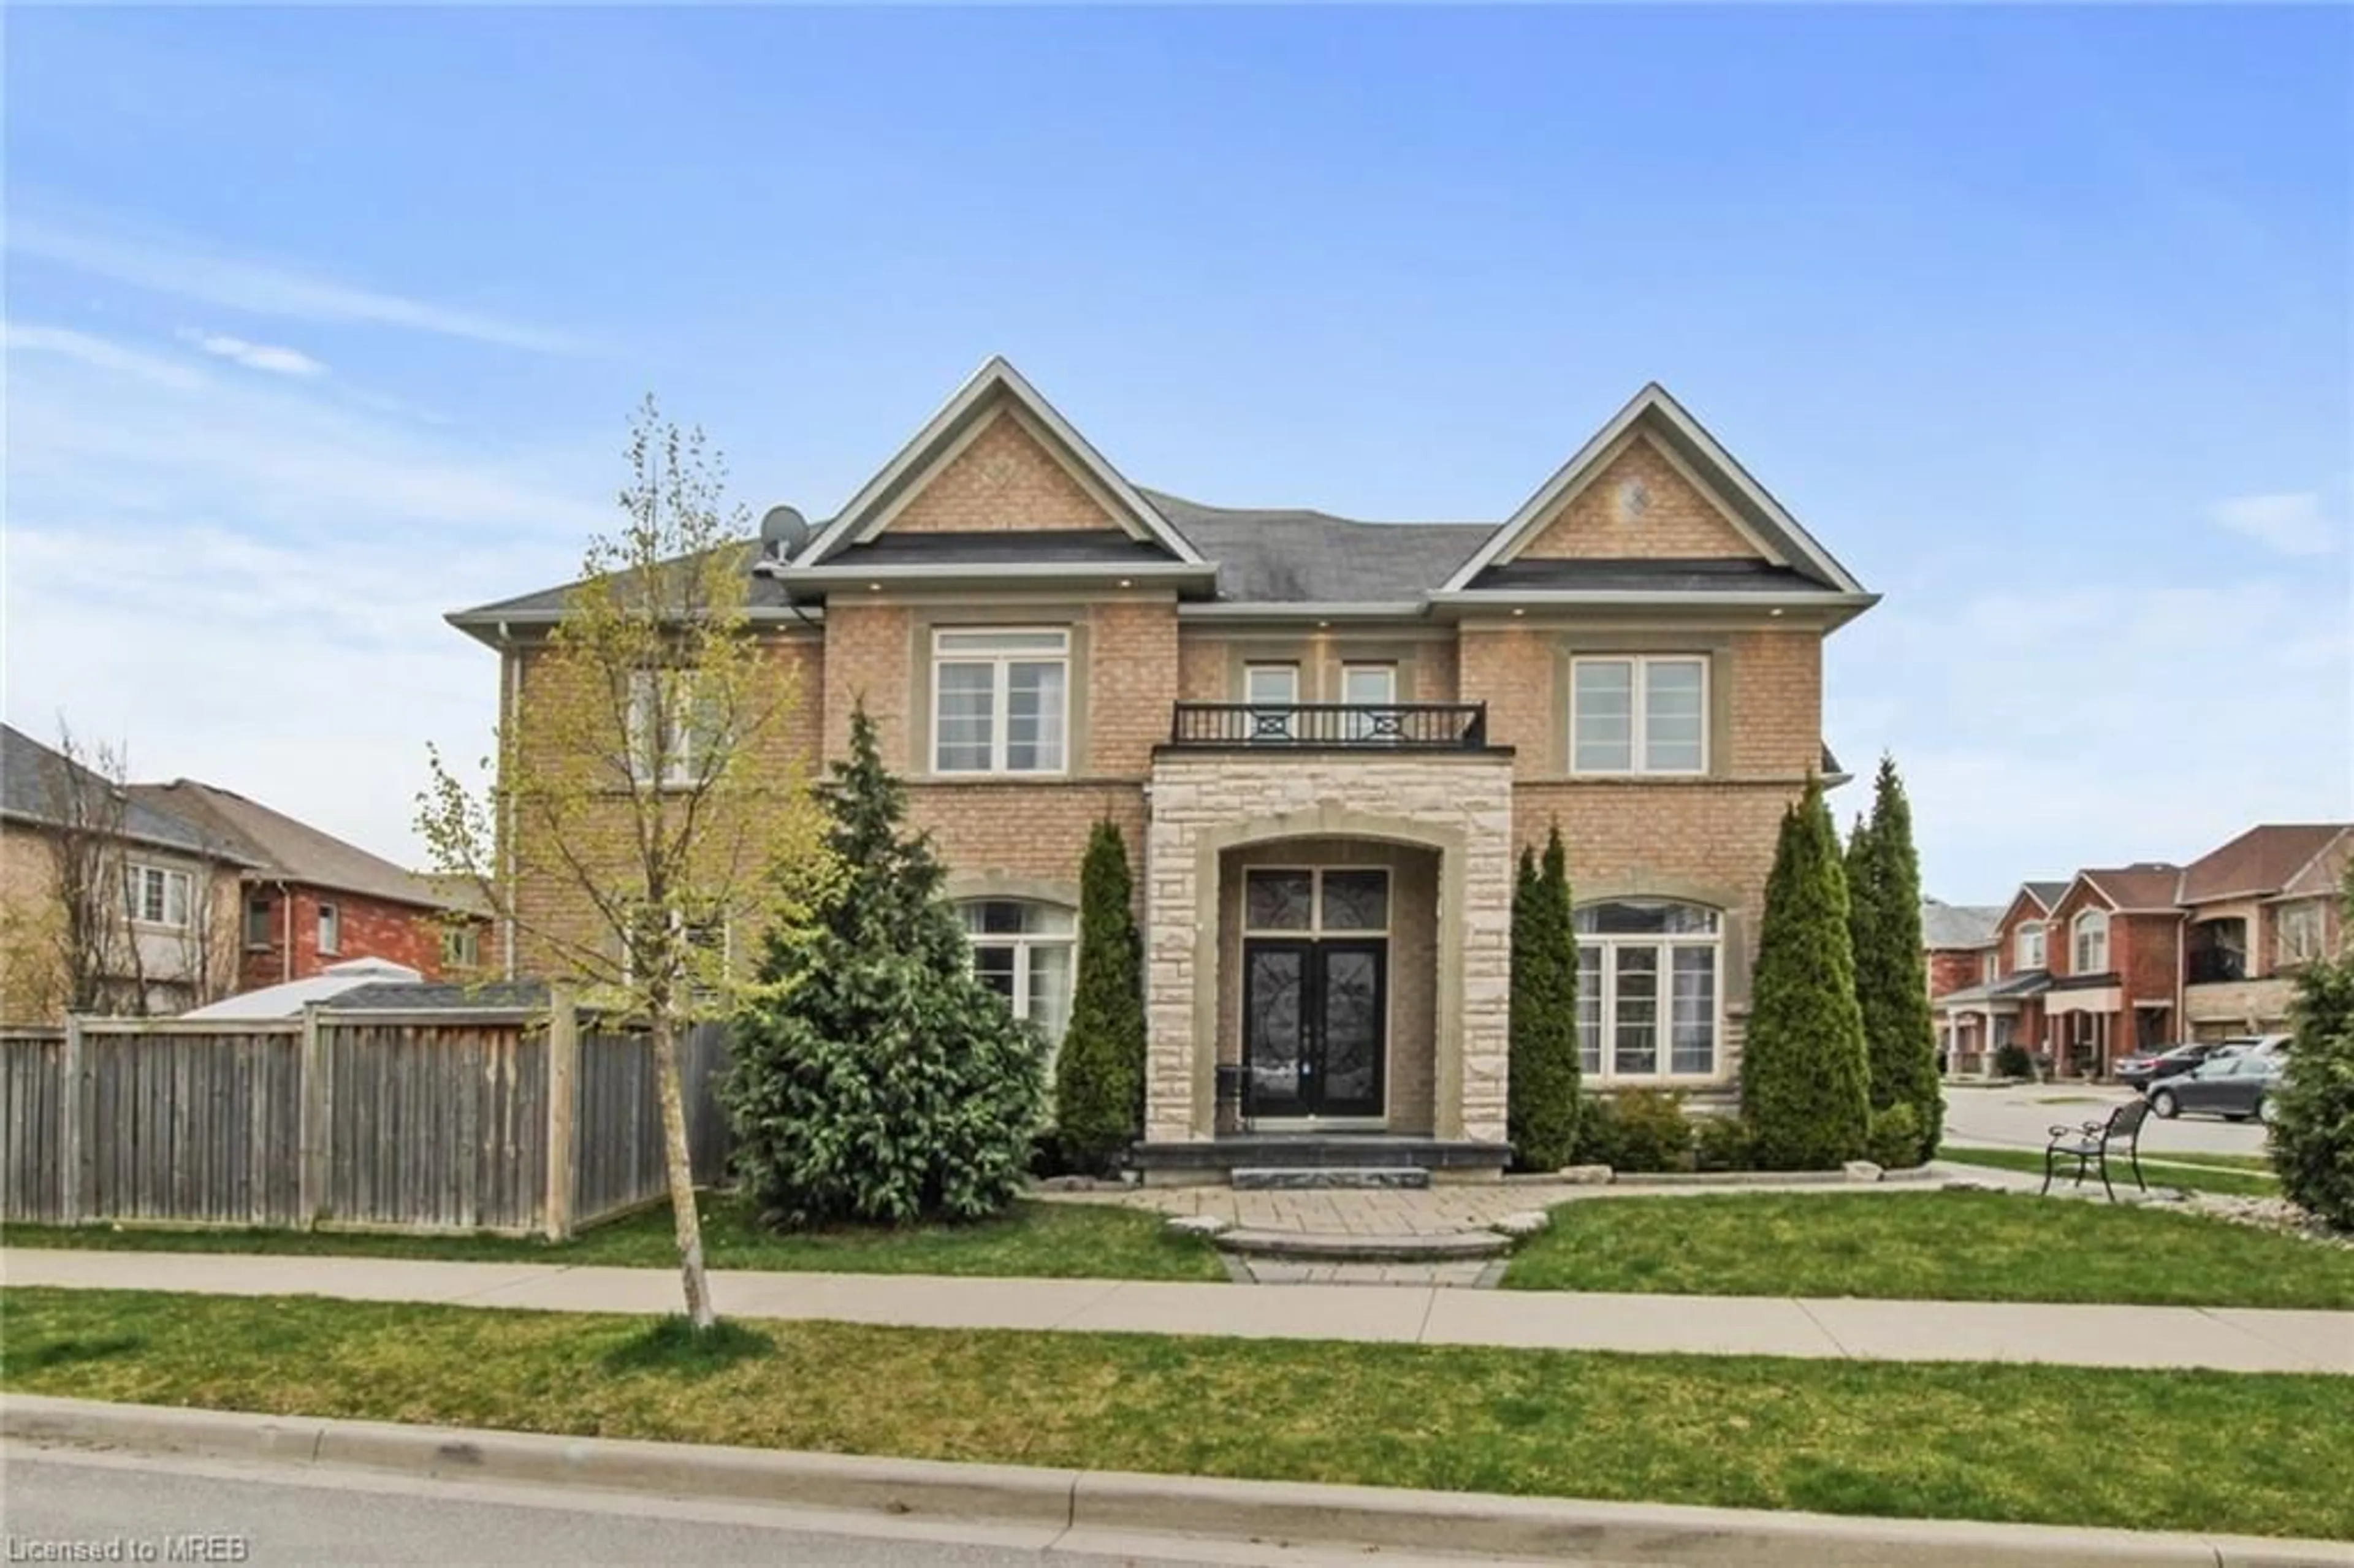 Home with brick exterior material for 4276 Vivaldi Rd, Burlington Ontario L7M 0N5